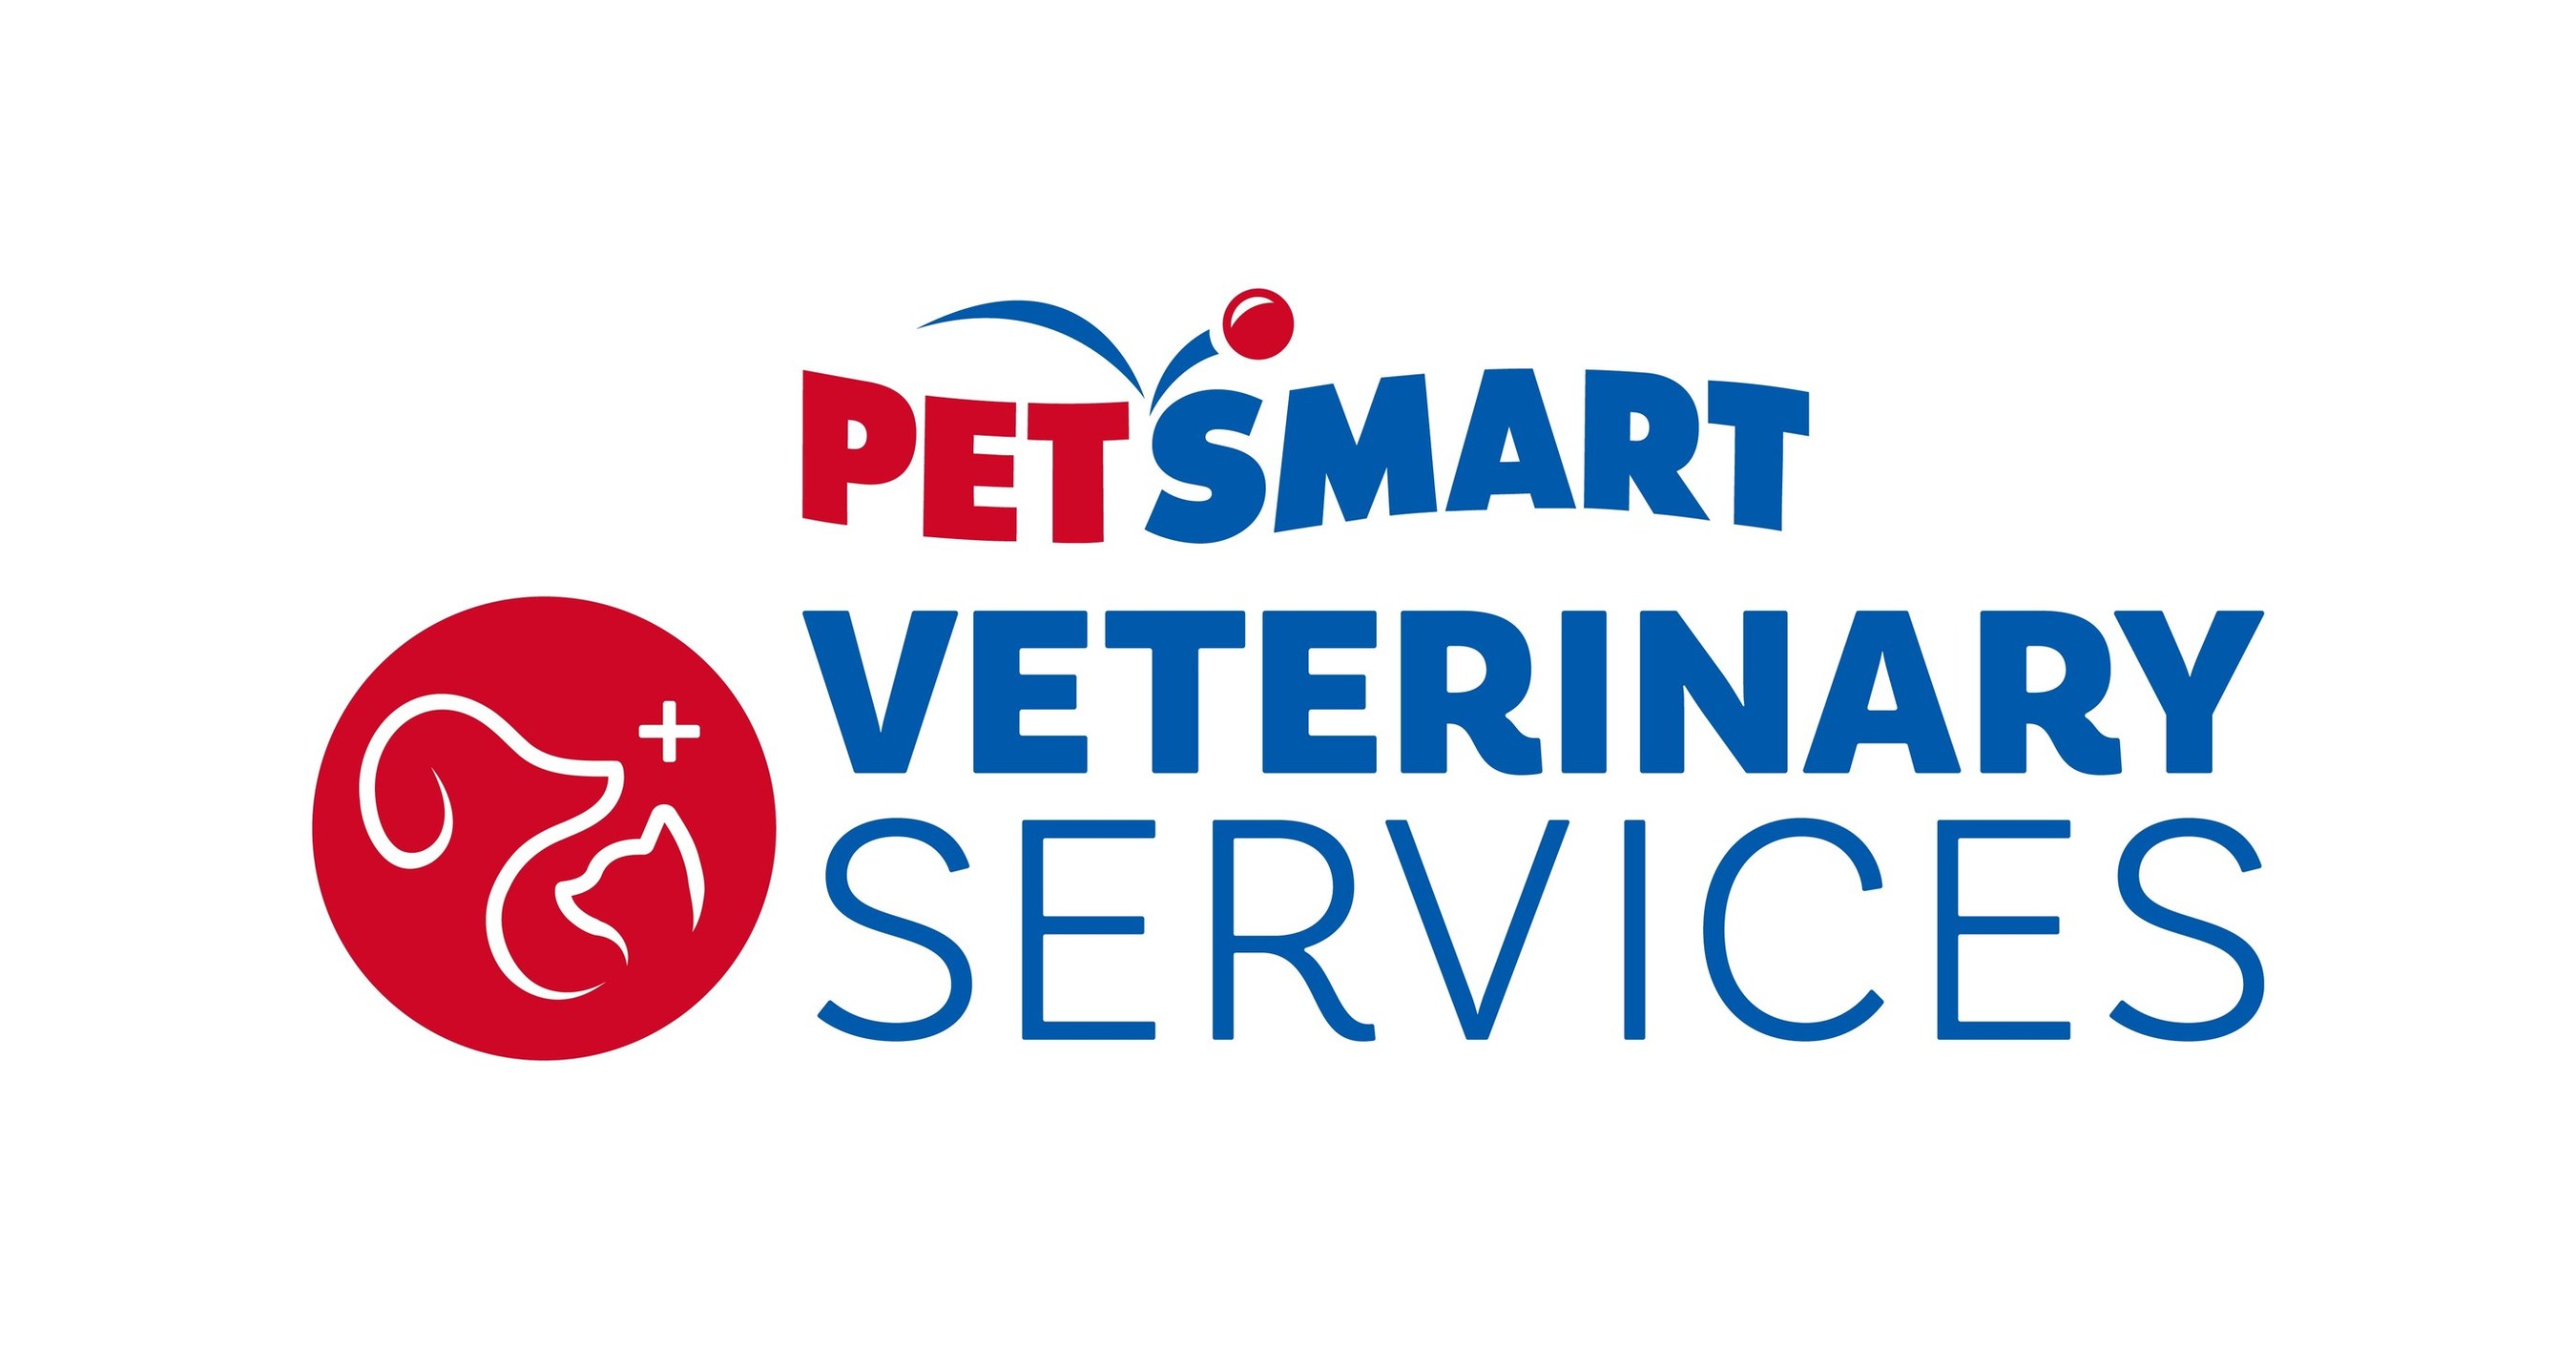 2. PetSmart Veterinary Services - wide 6